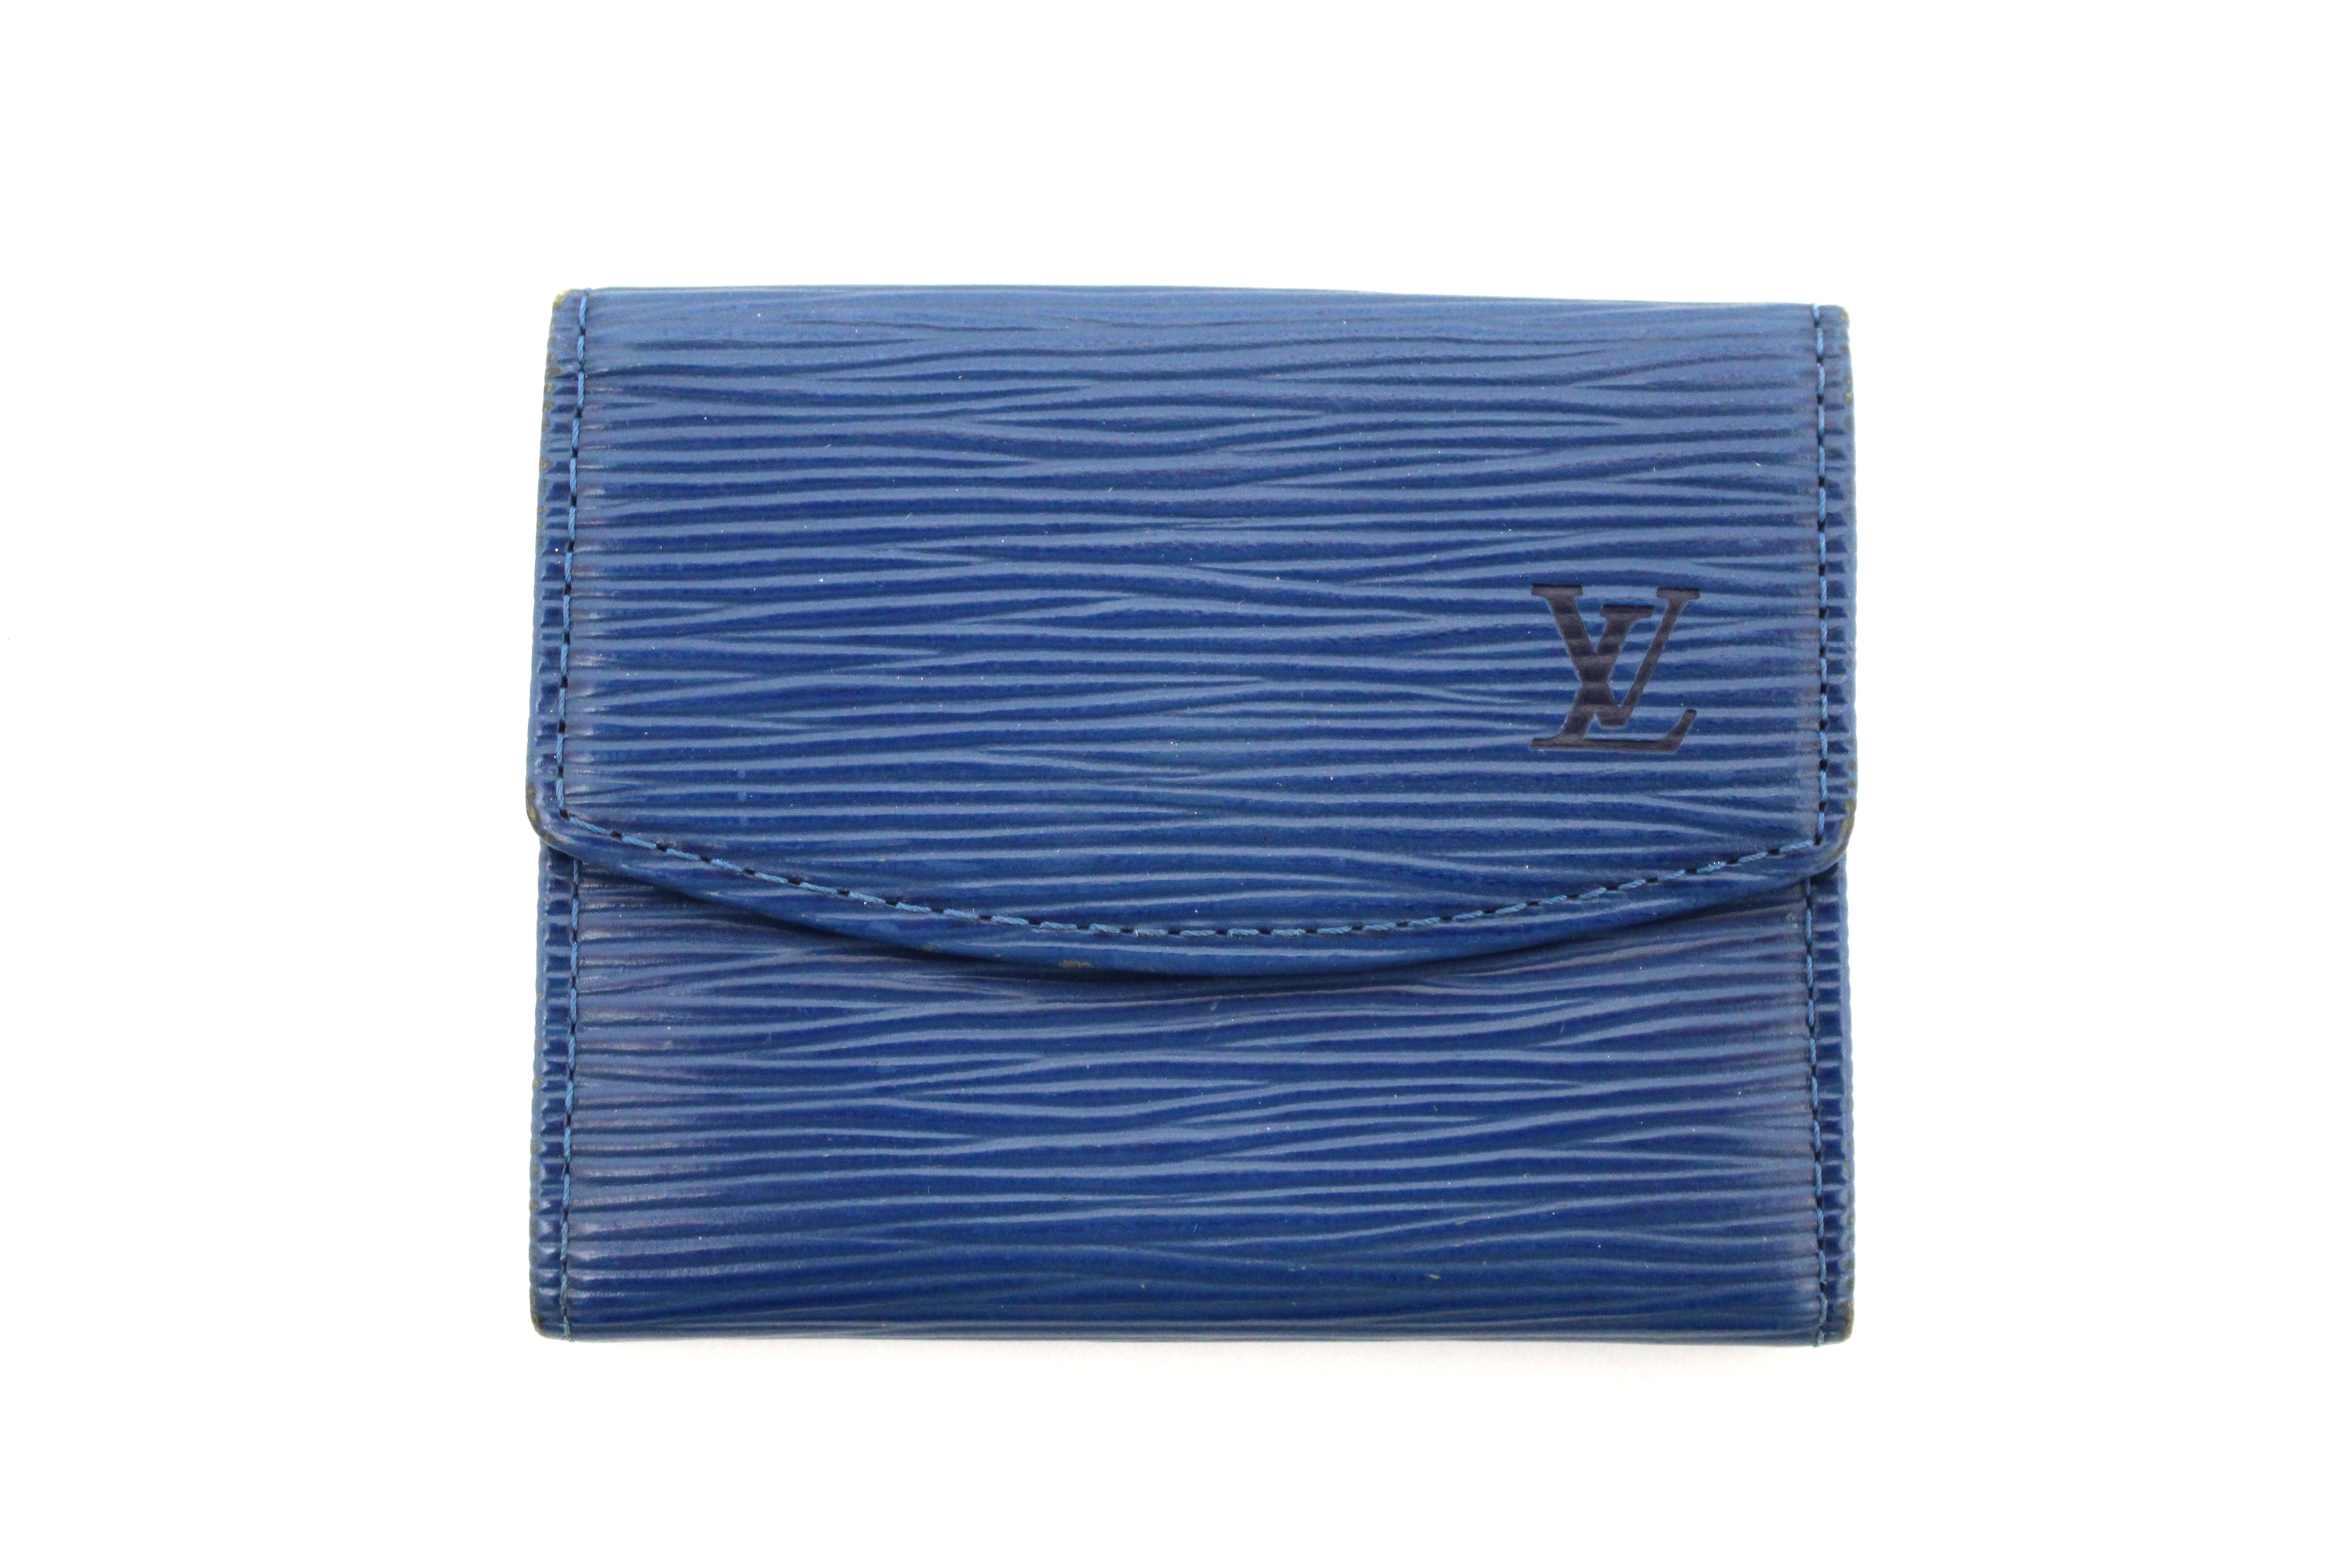 Vintage Louis Vuitton Epi Wallet